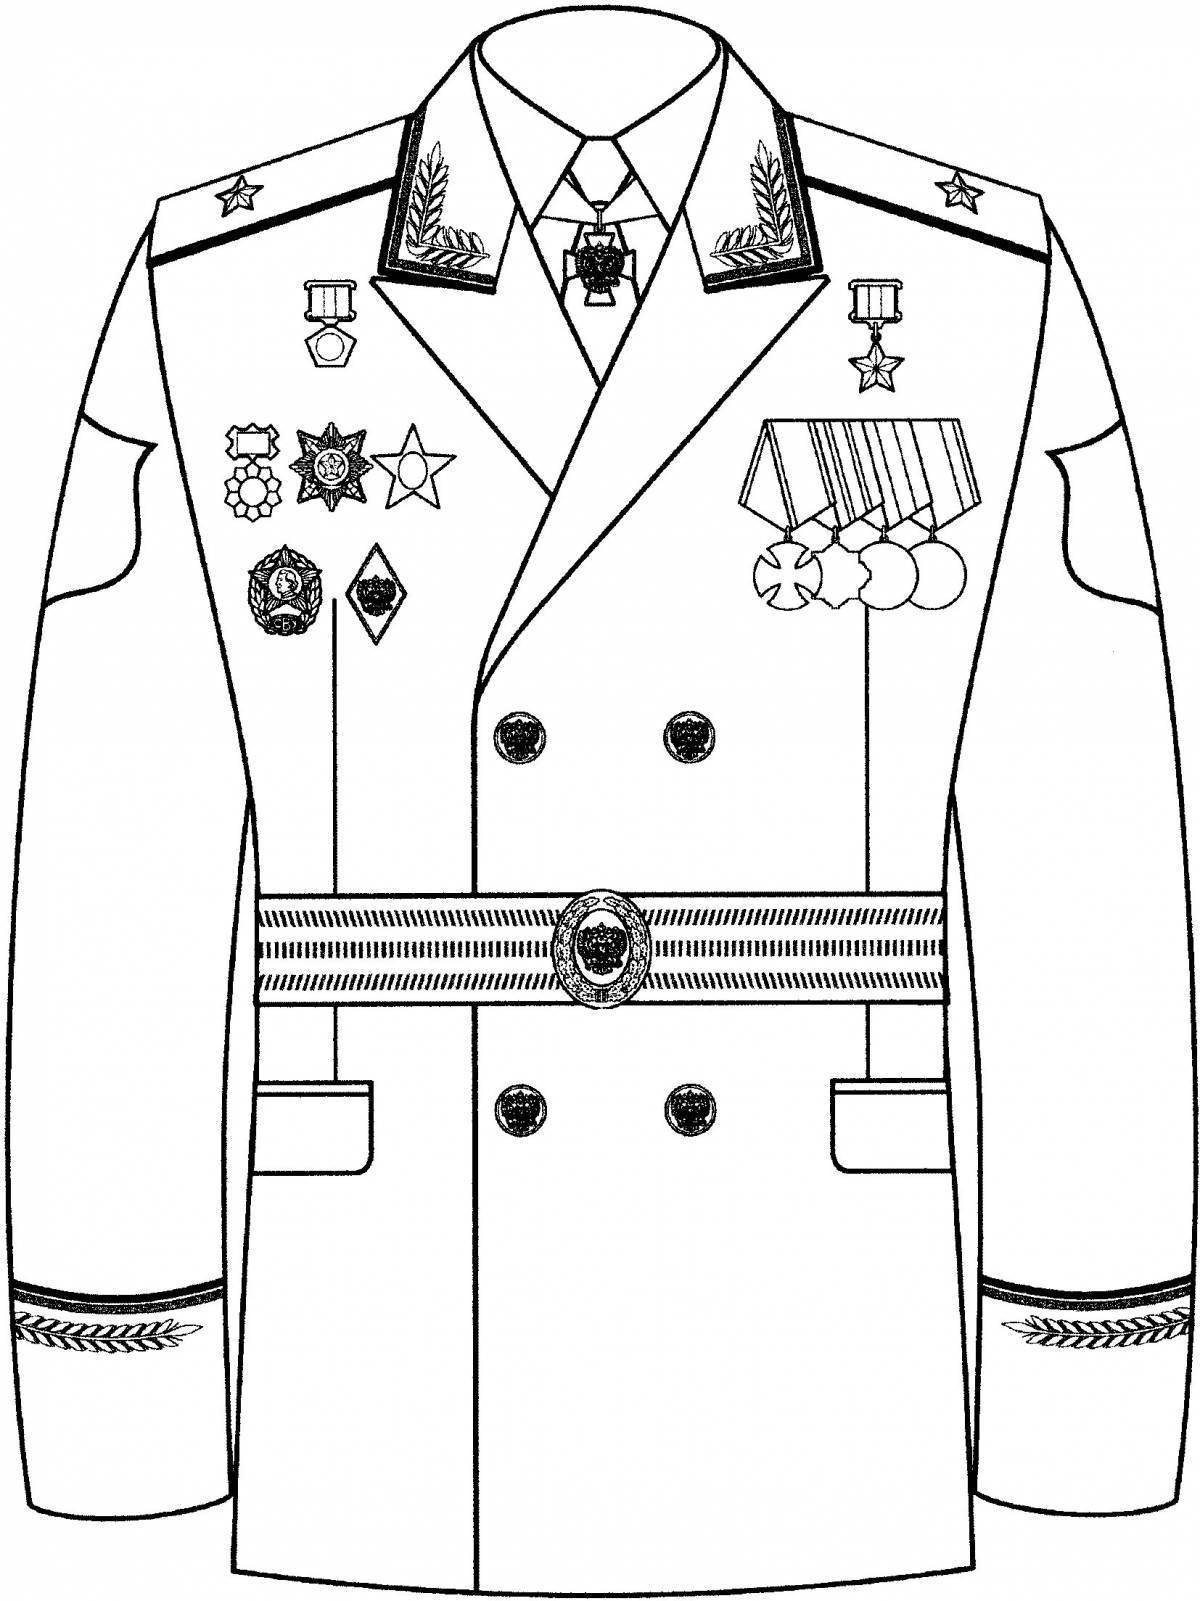 Coloring book shiny military uniform